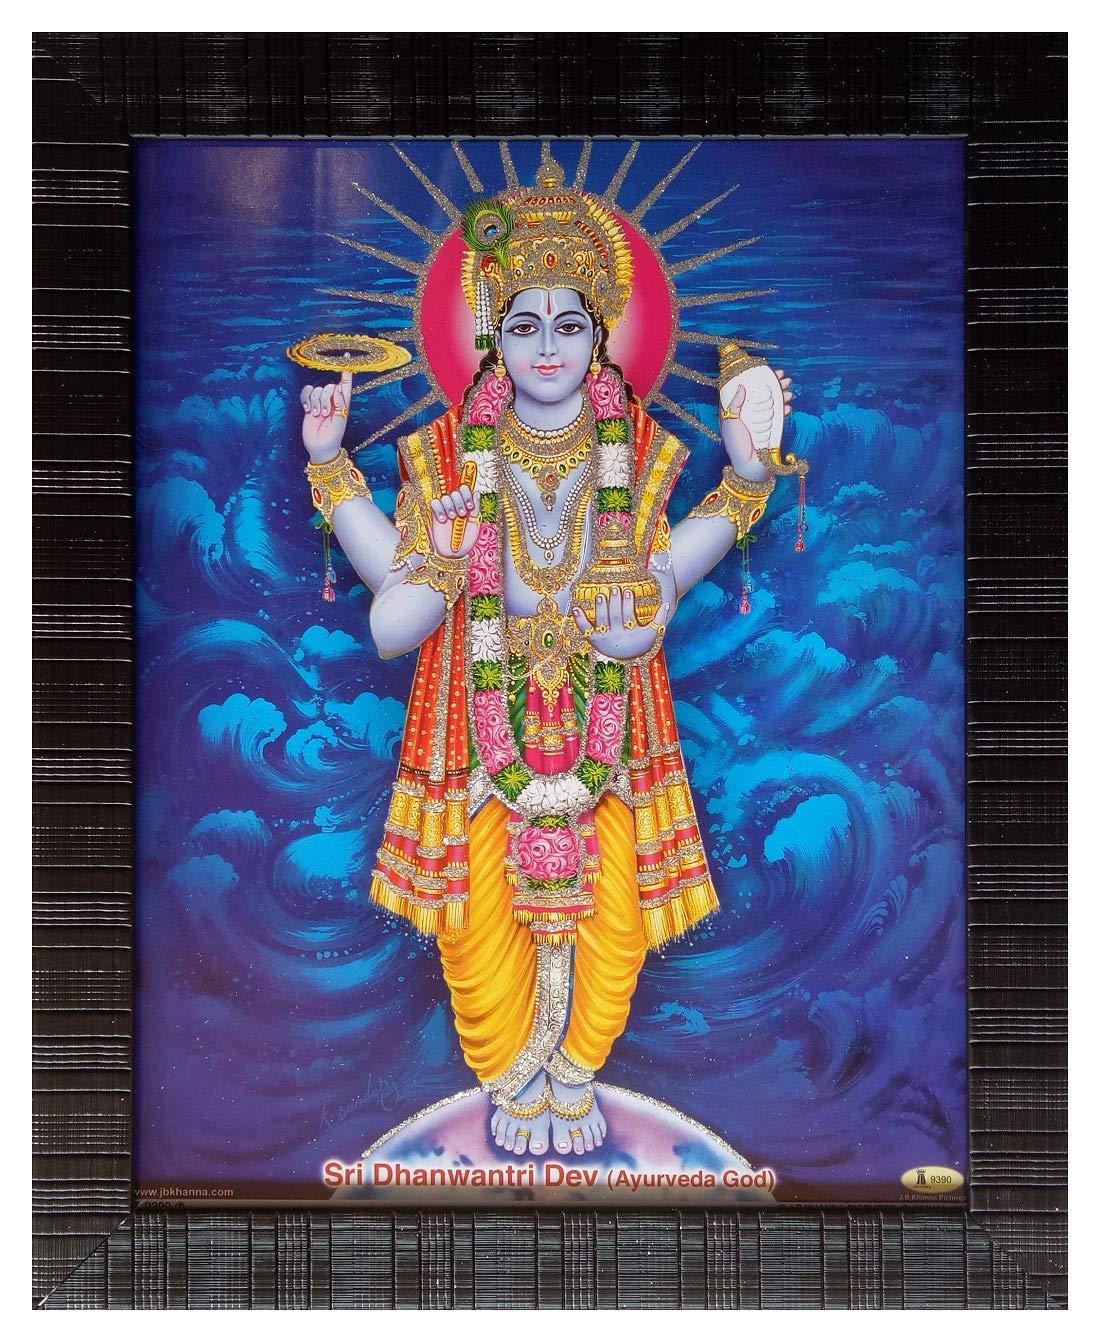 Shree Handicraft Home Decorative Lord dhanvantari dev ayurvedic god Painting Photo Frame Painting Wall Mount (26 cm x 32 cm x 1.5 cm, Acrylic Sheet Used): Amazon.in: Home & Kitchen